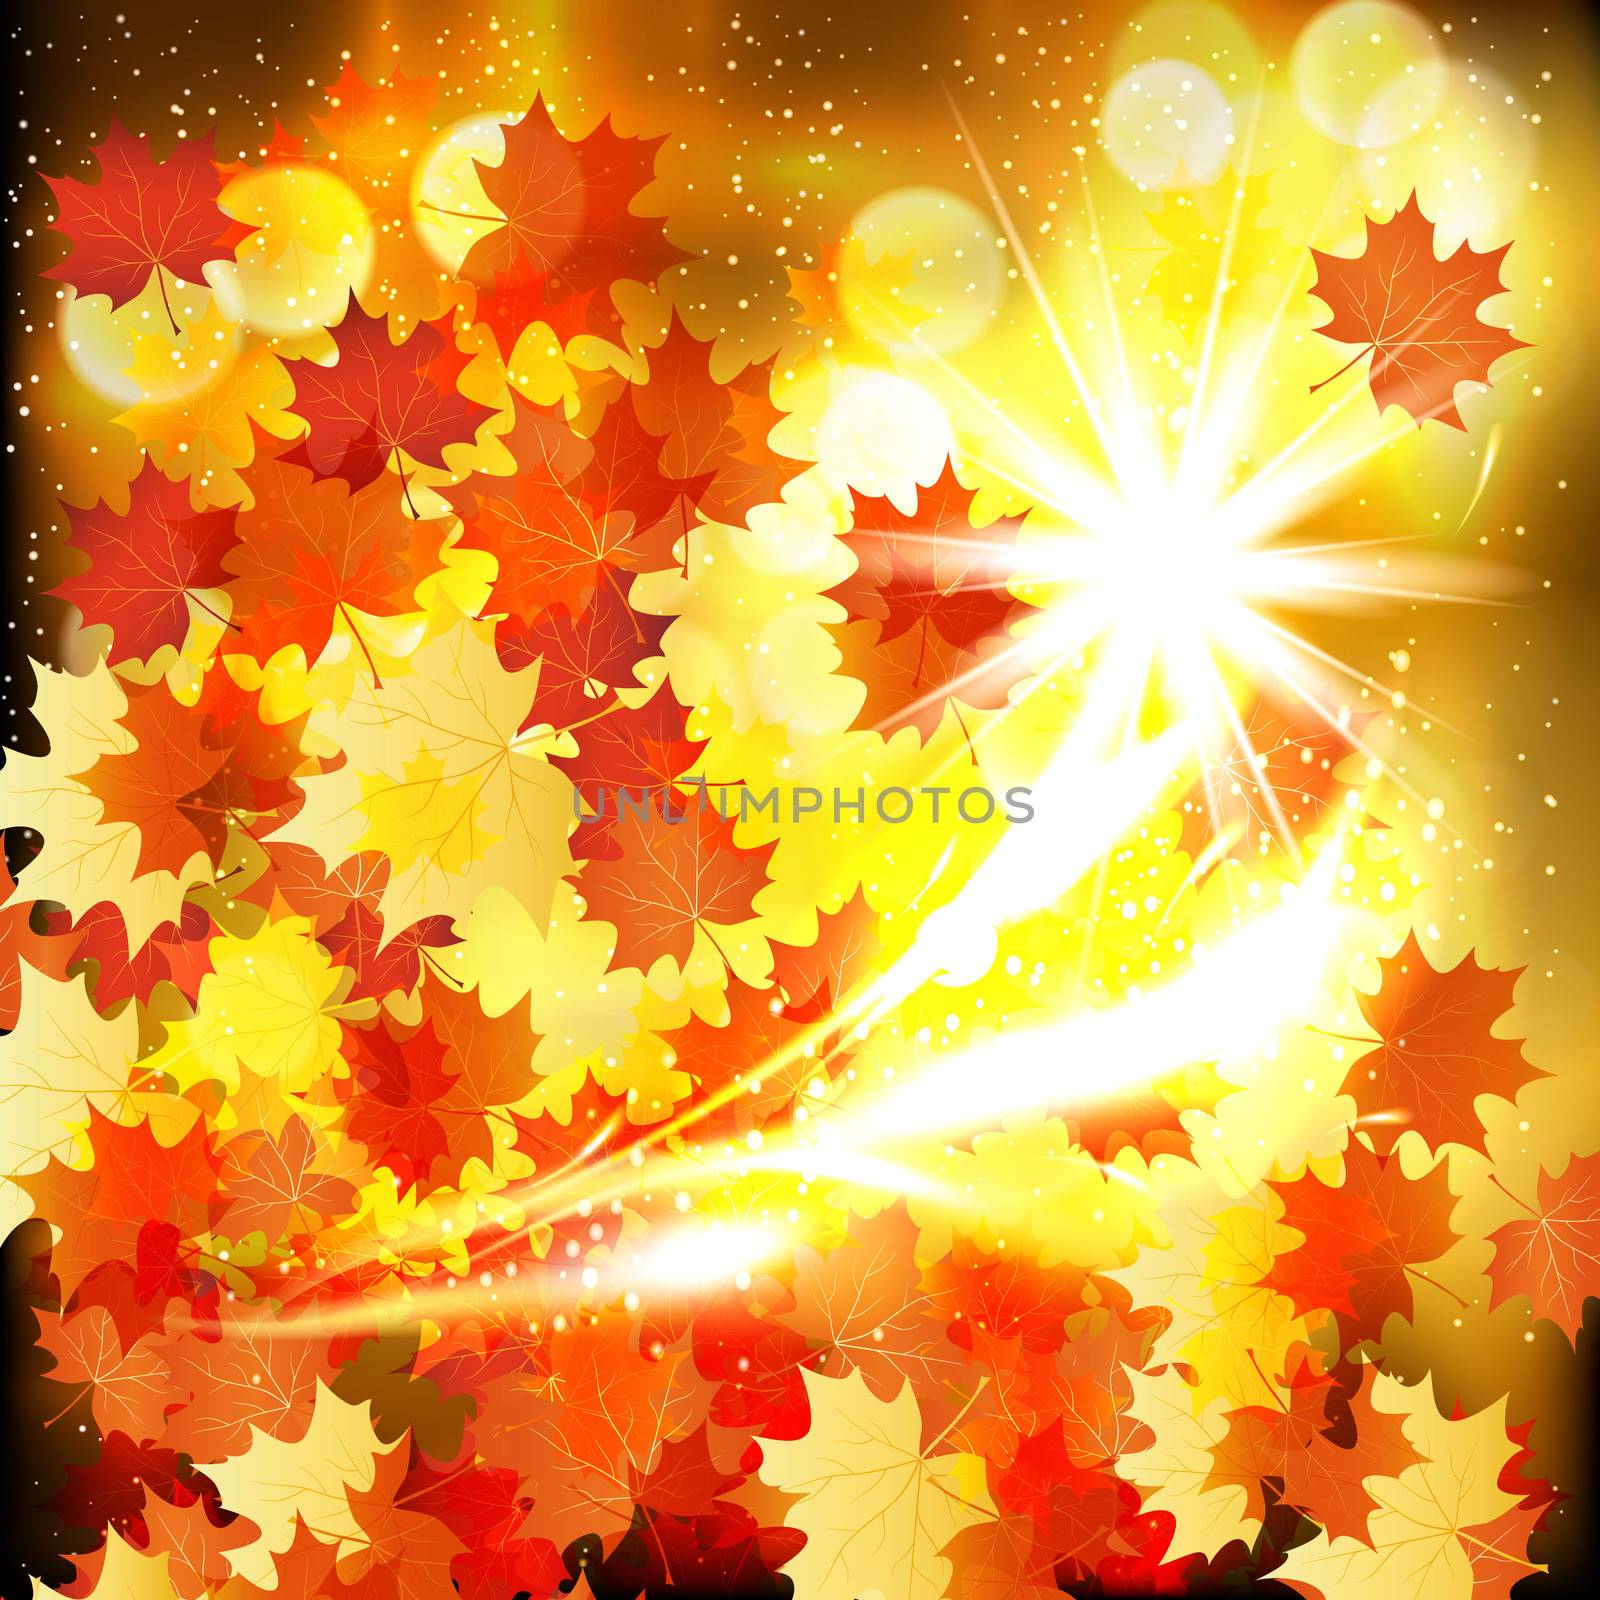 Autumn leaves design background.